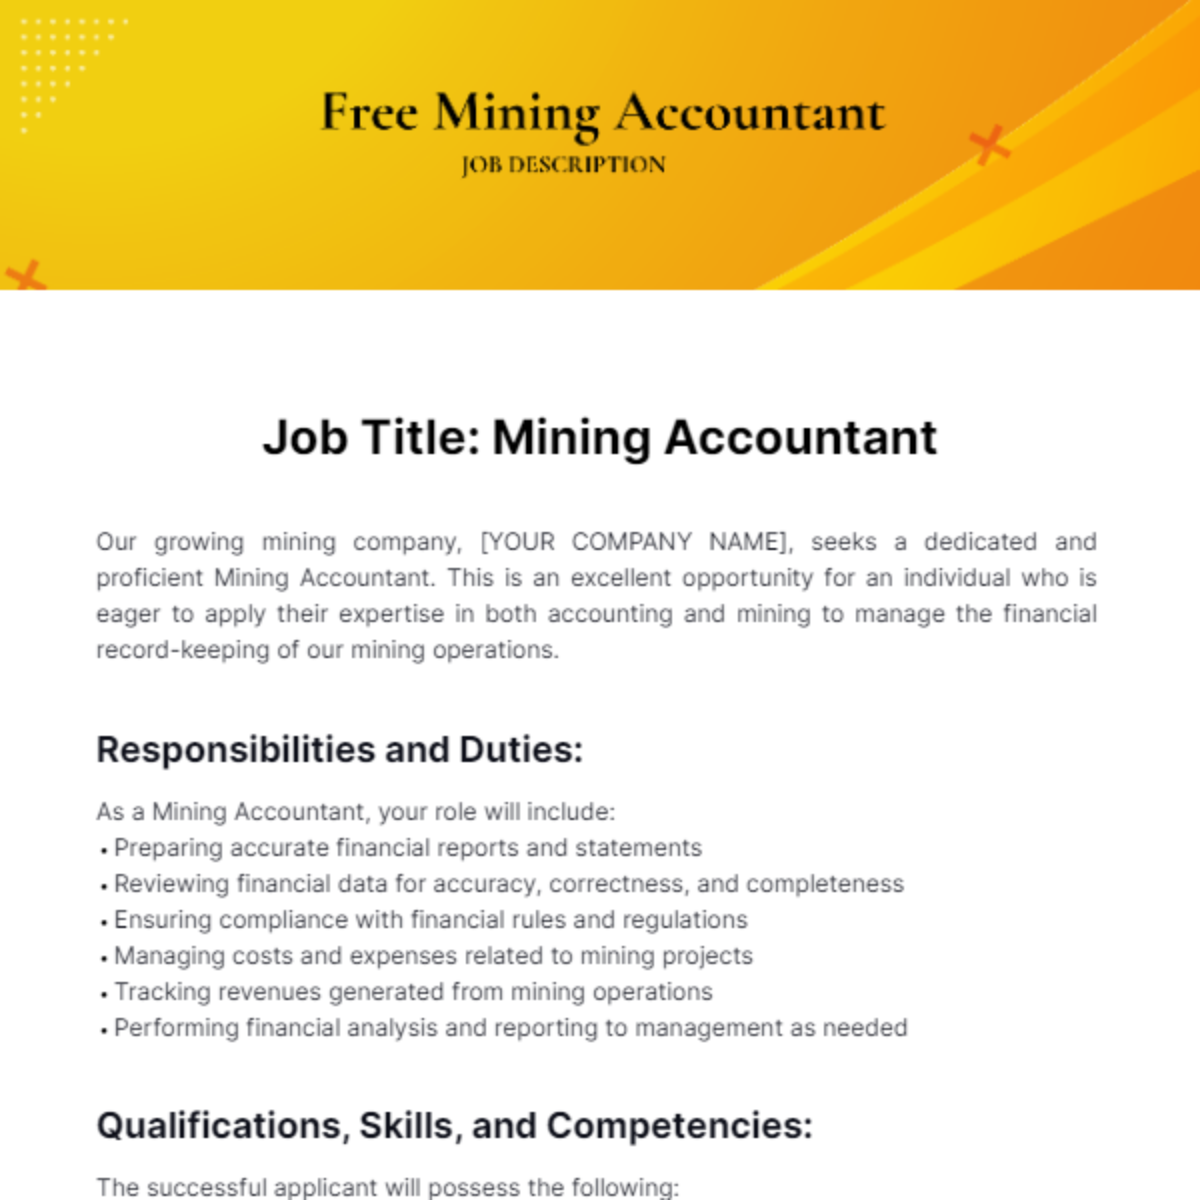 Free Mining Accountant Job Description Template